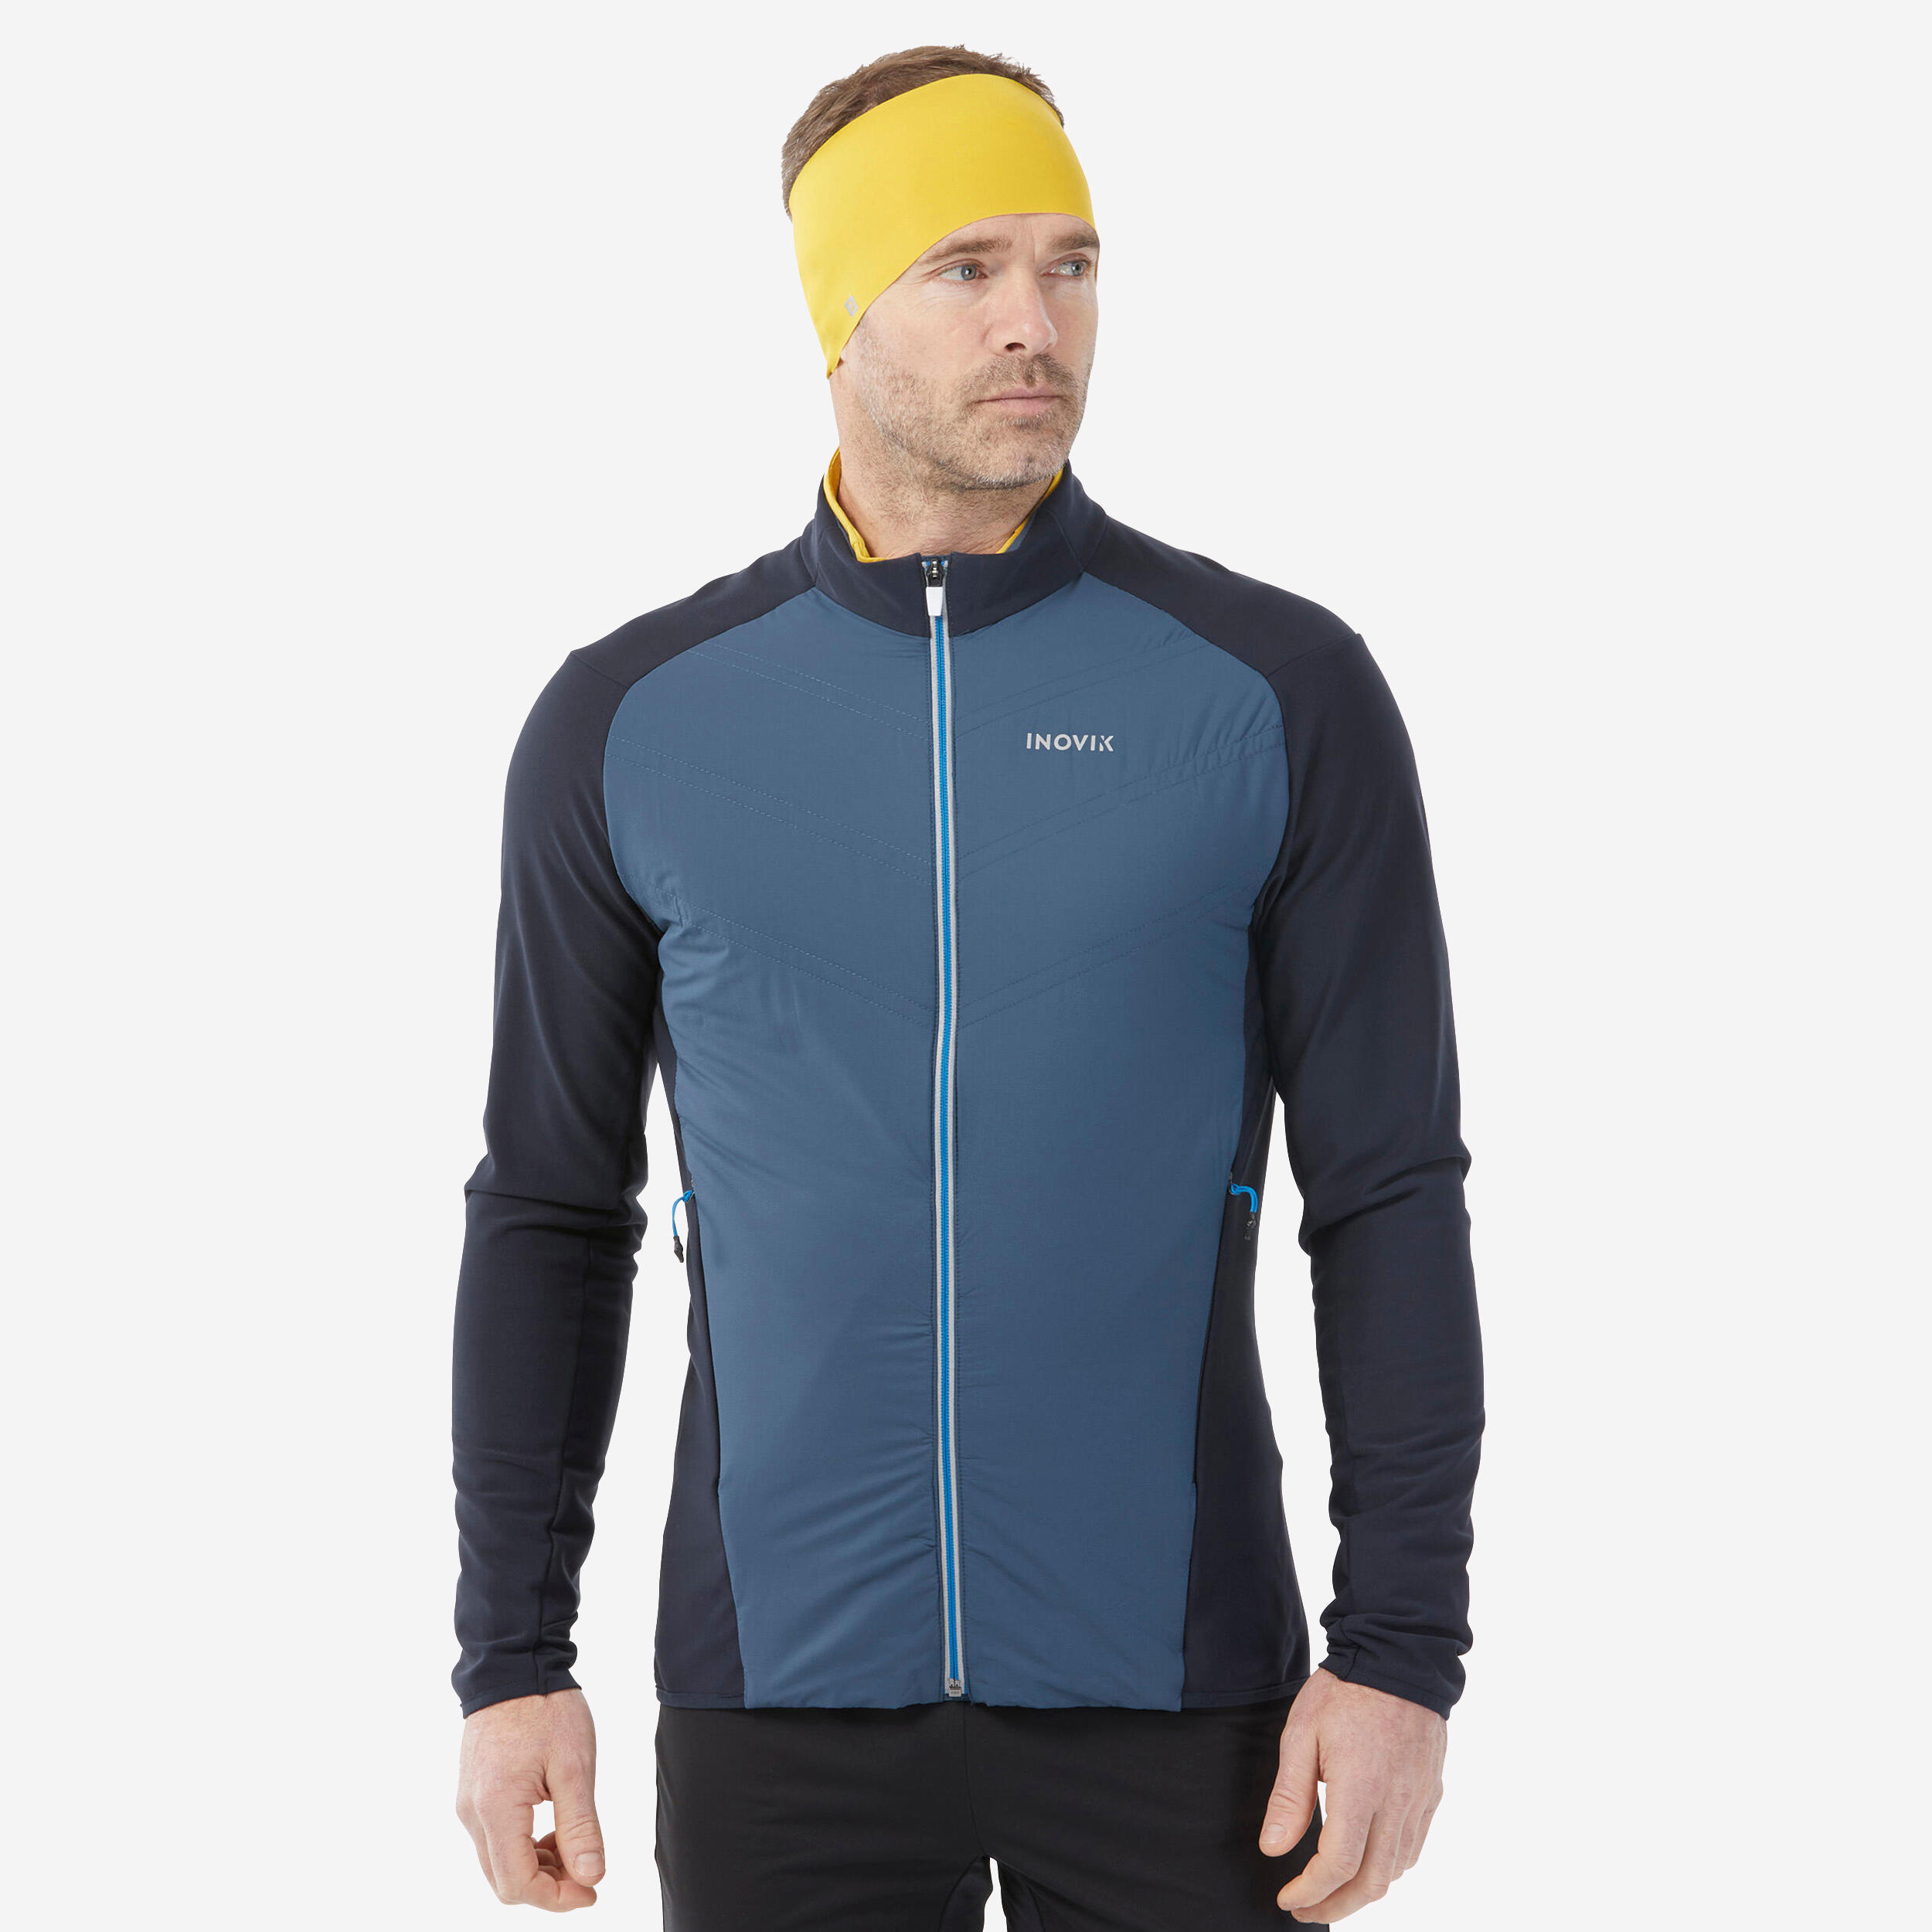 Men's Cross-Country Ski Jacket – 550